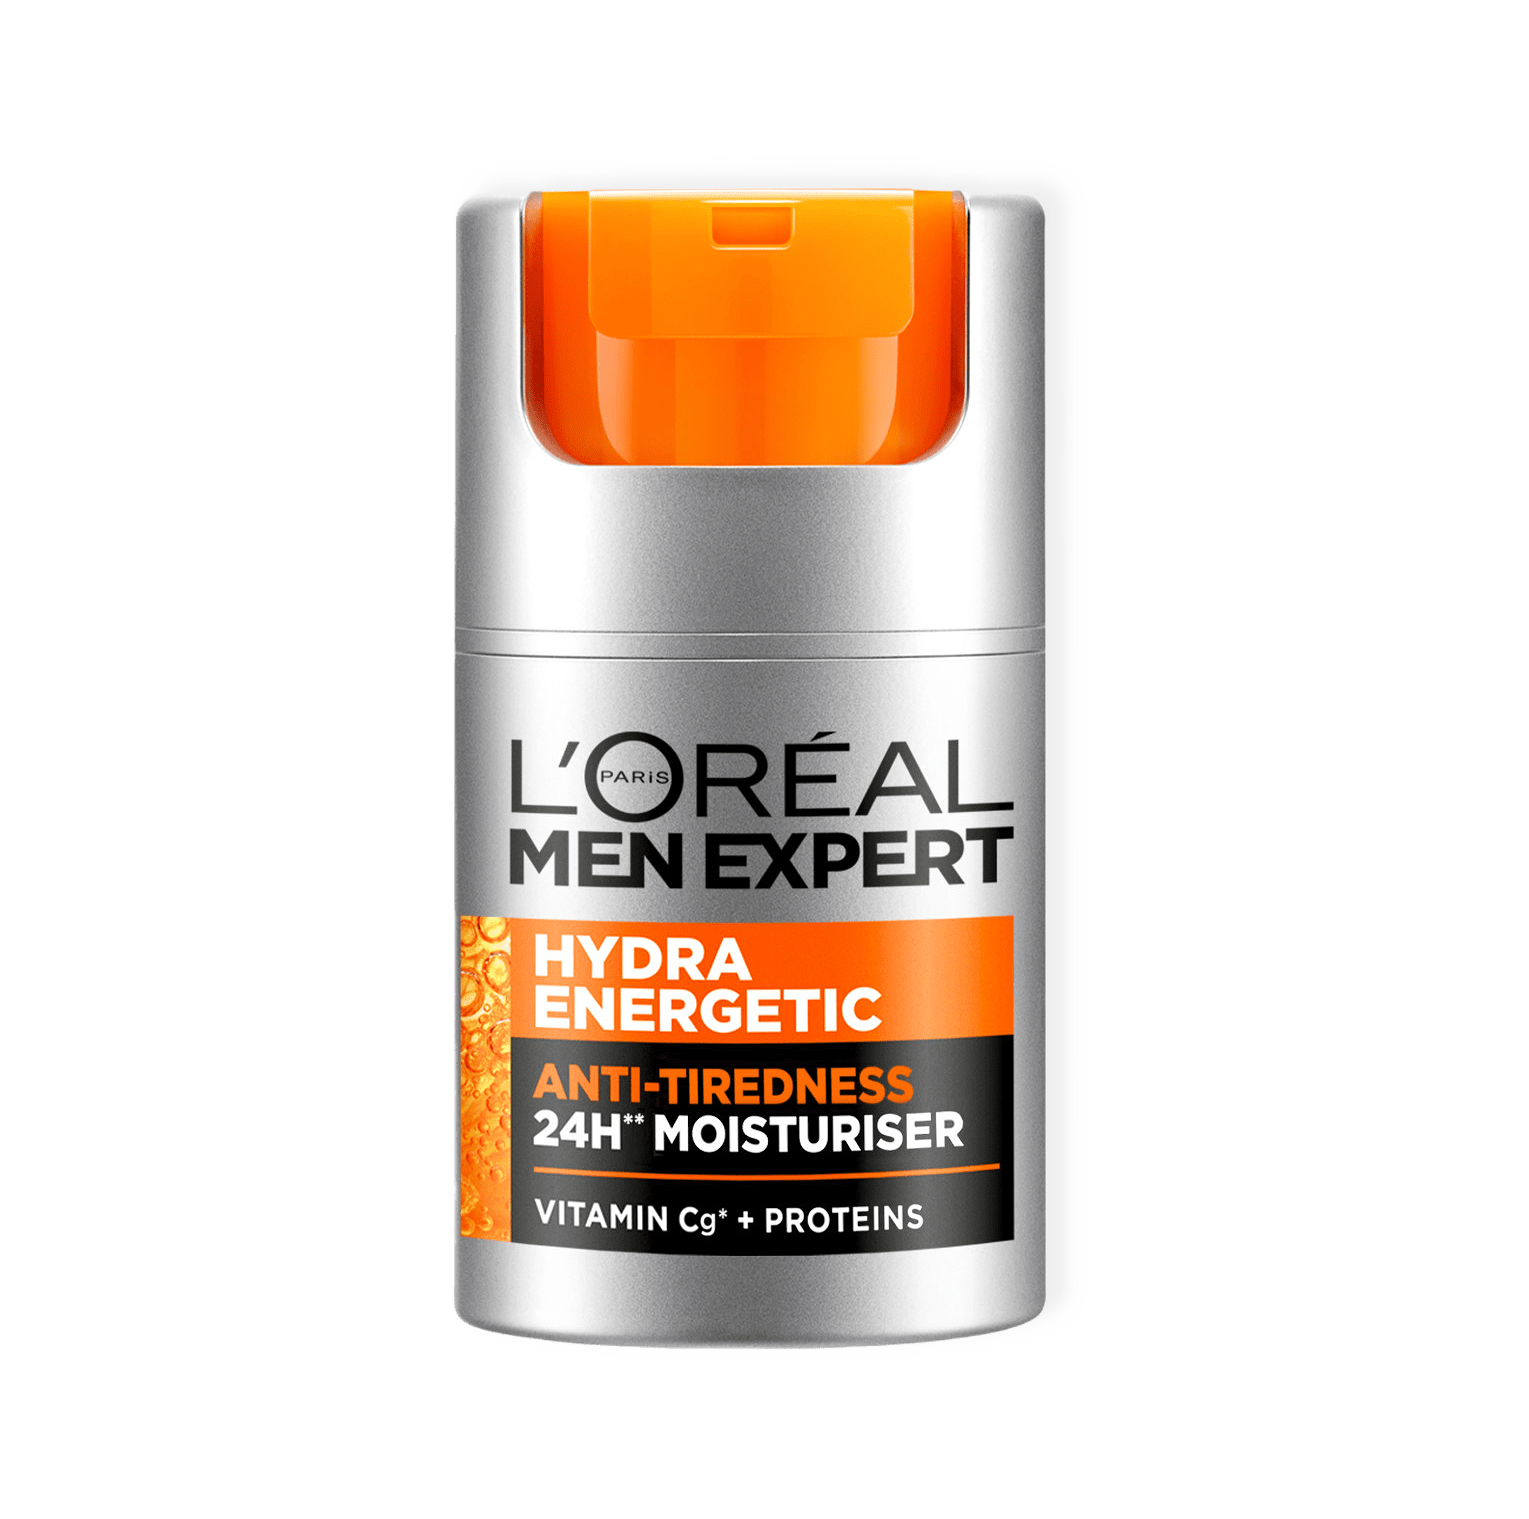 Men Expert Hydra Energetic Moisturising Lotion 24H Anti-Tiredness från L'Oréal Paris